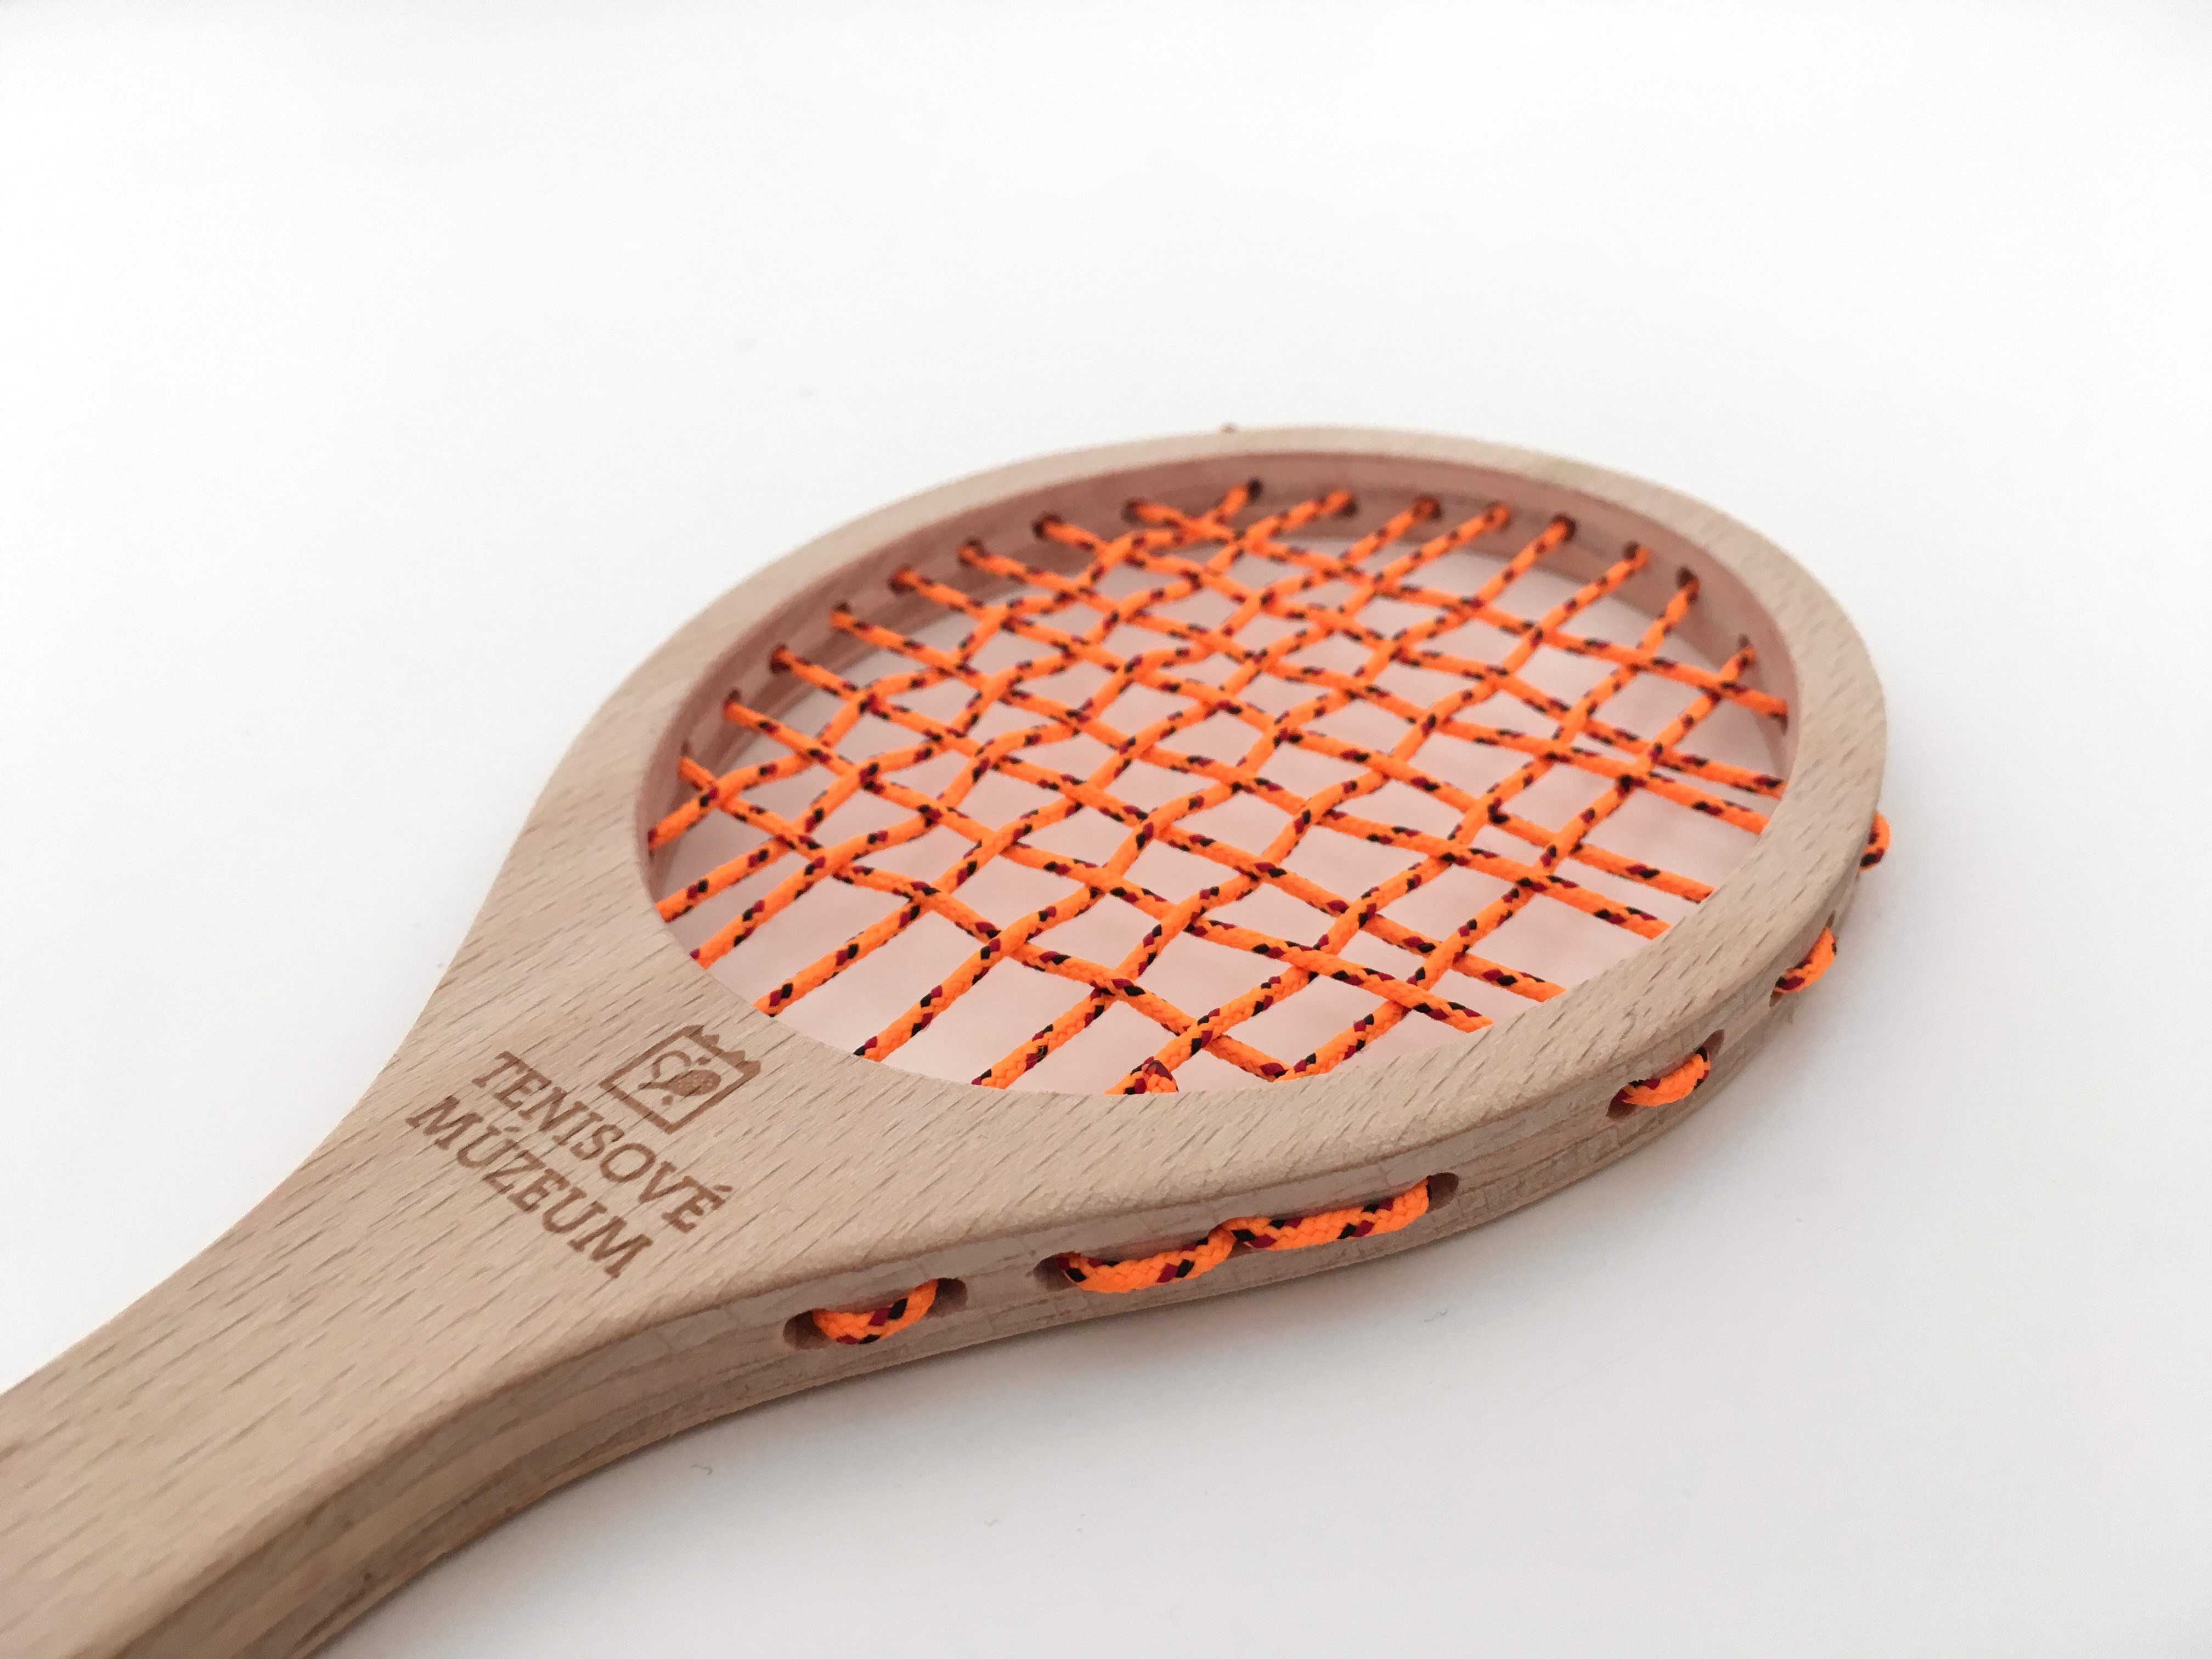 Cnc Routing Wood Tvaroch Tennis Racket 2